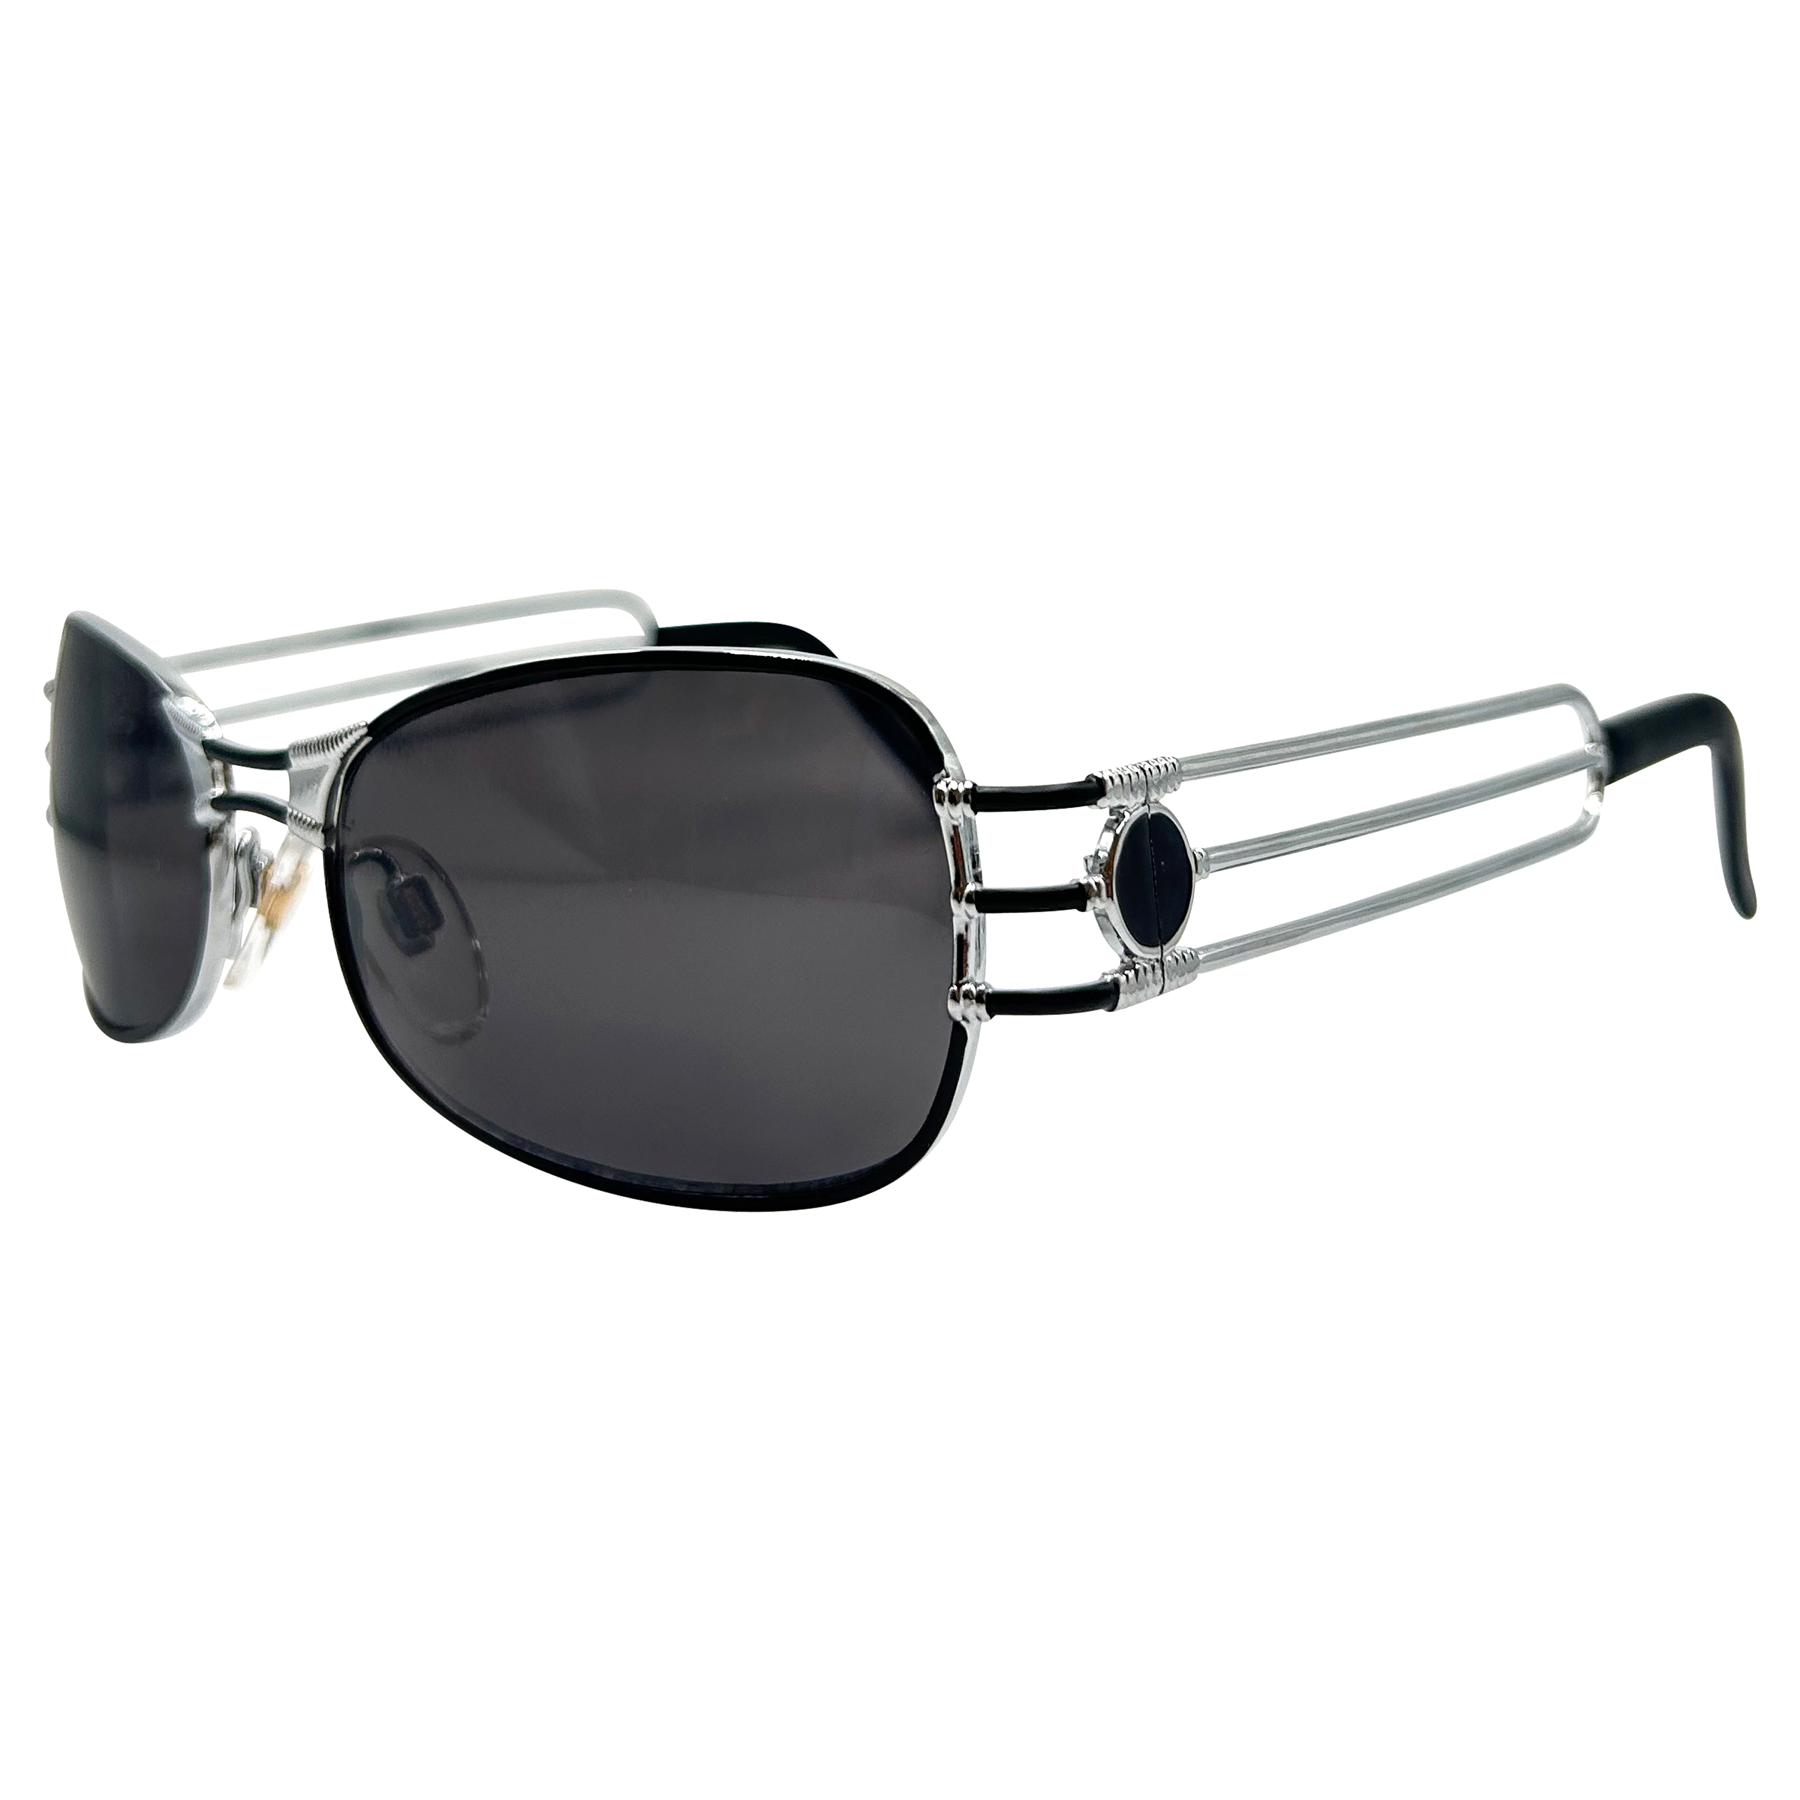 SEBASTIAN Square 90s Sunglasses